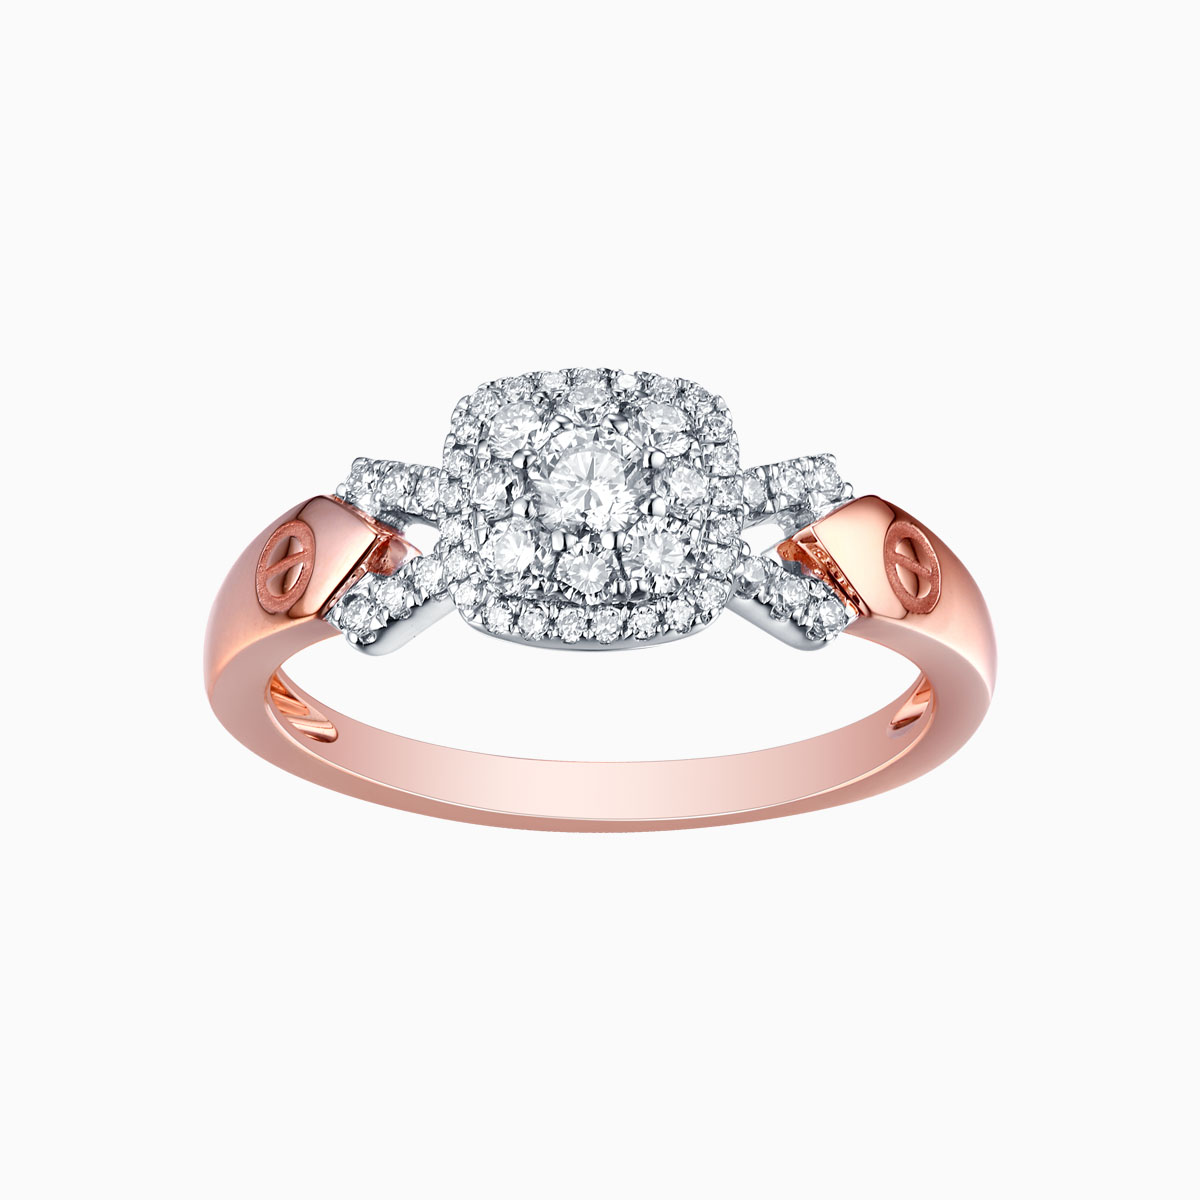 R17604WHT- 14K Rose Gold Diamond Ring, 0.45 TCW